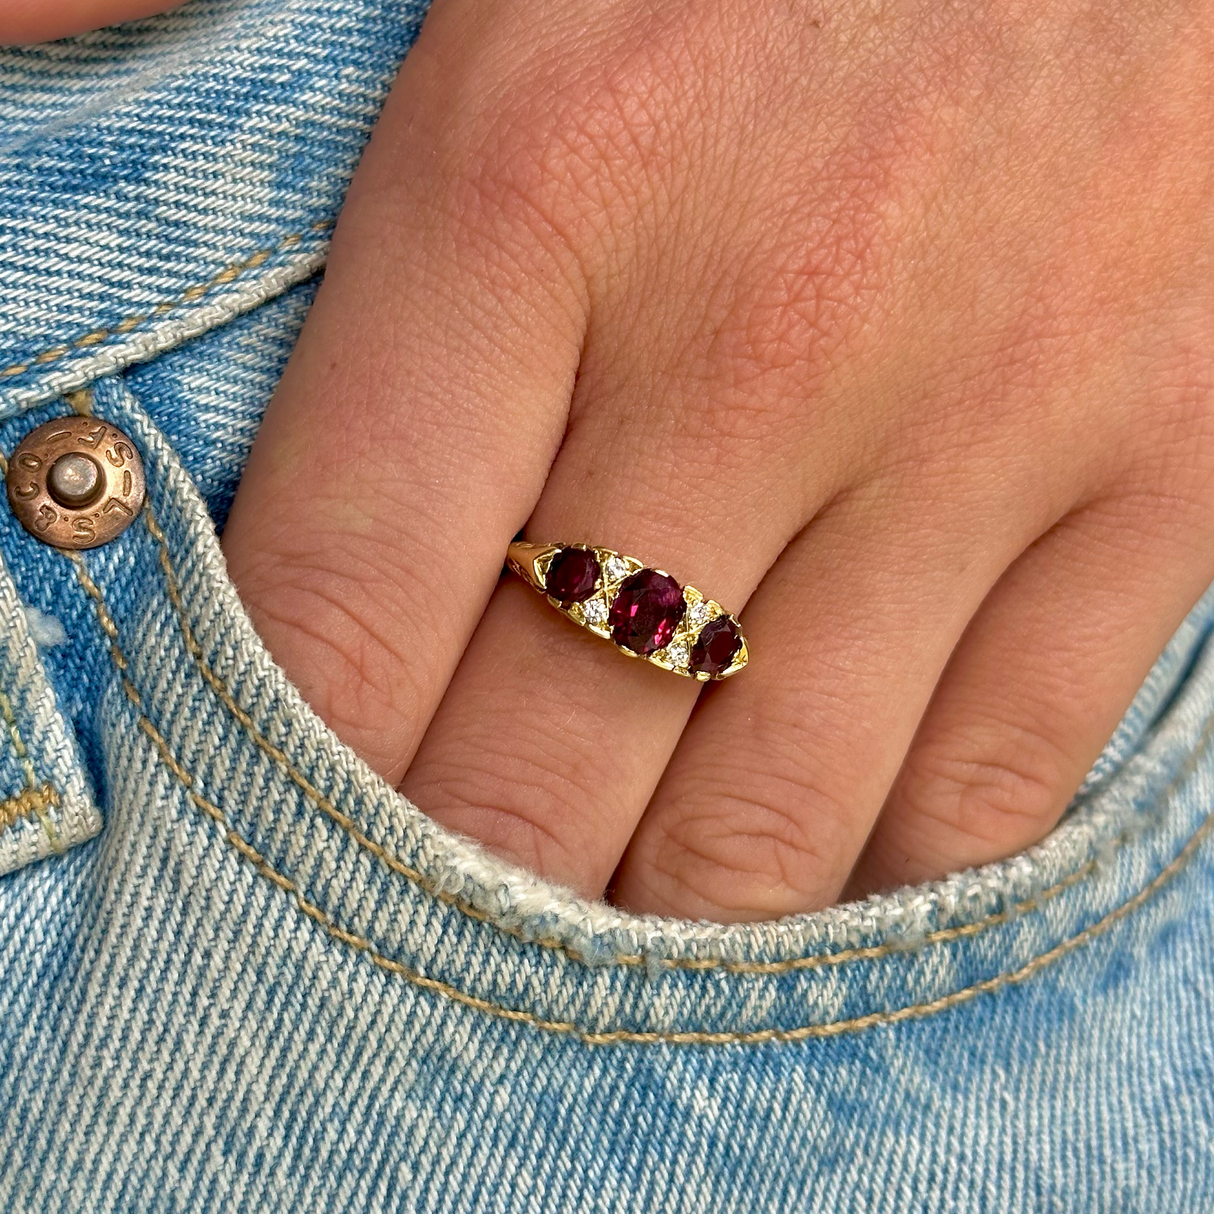 Antique Edwardian three stone ruby and diamond ring, worn on hand.